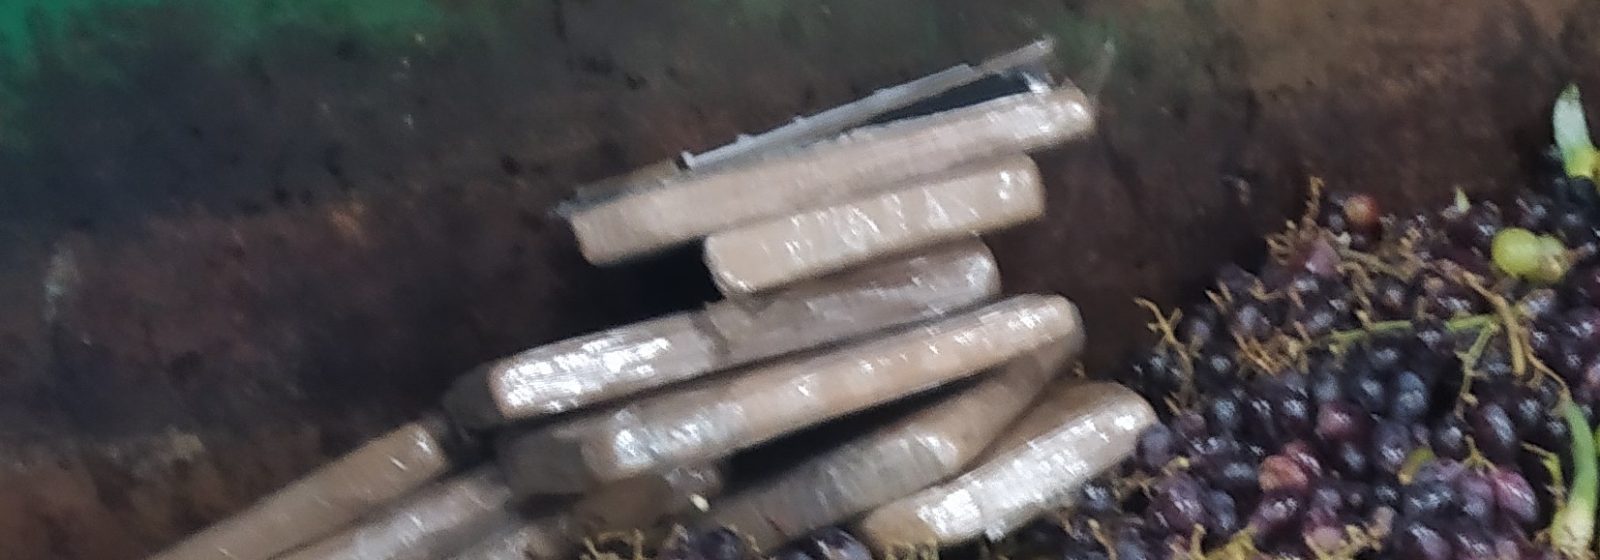 Cocaïne in container bioafval